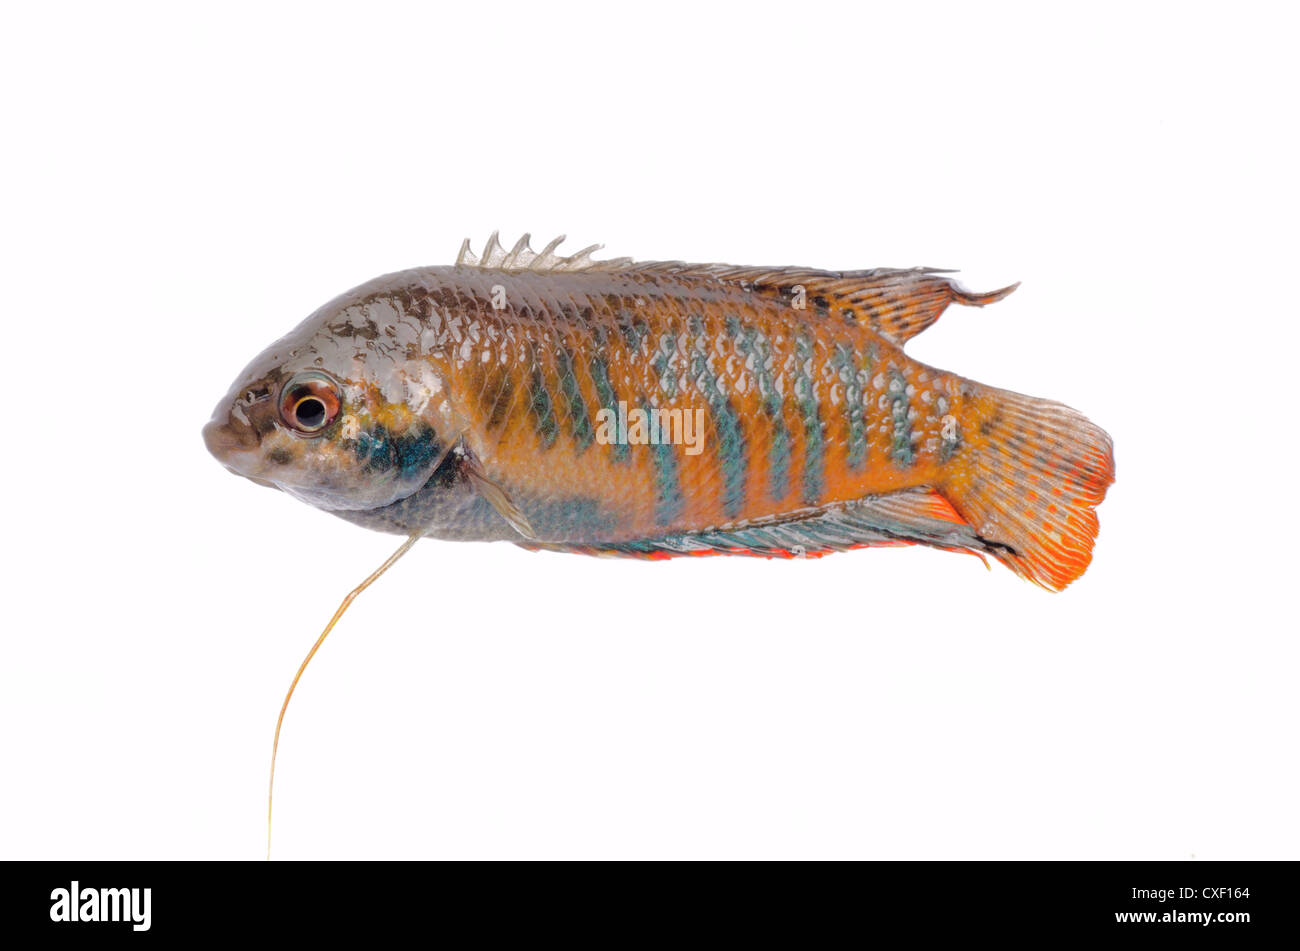 chinese fight fish Macropodus opercularis isolated on white Stock Photo